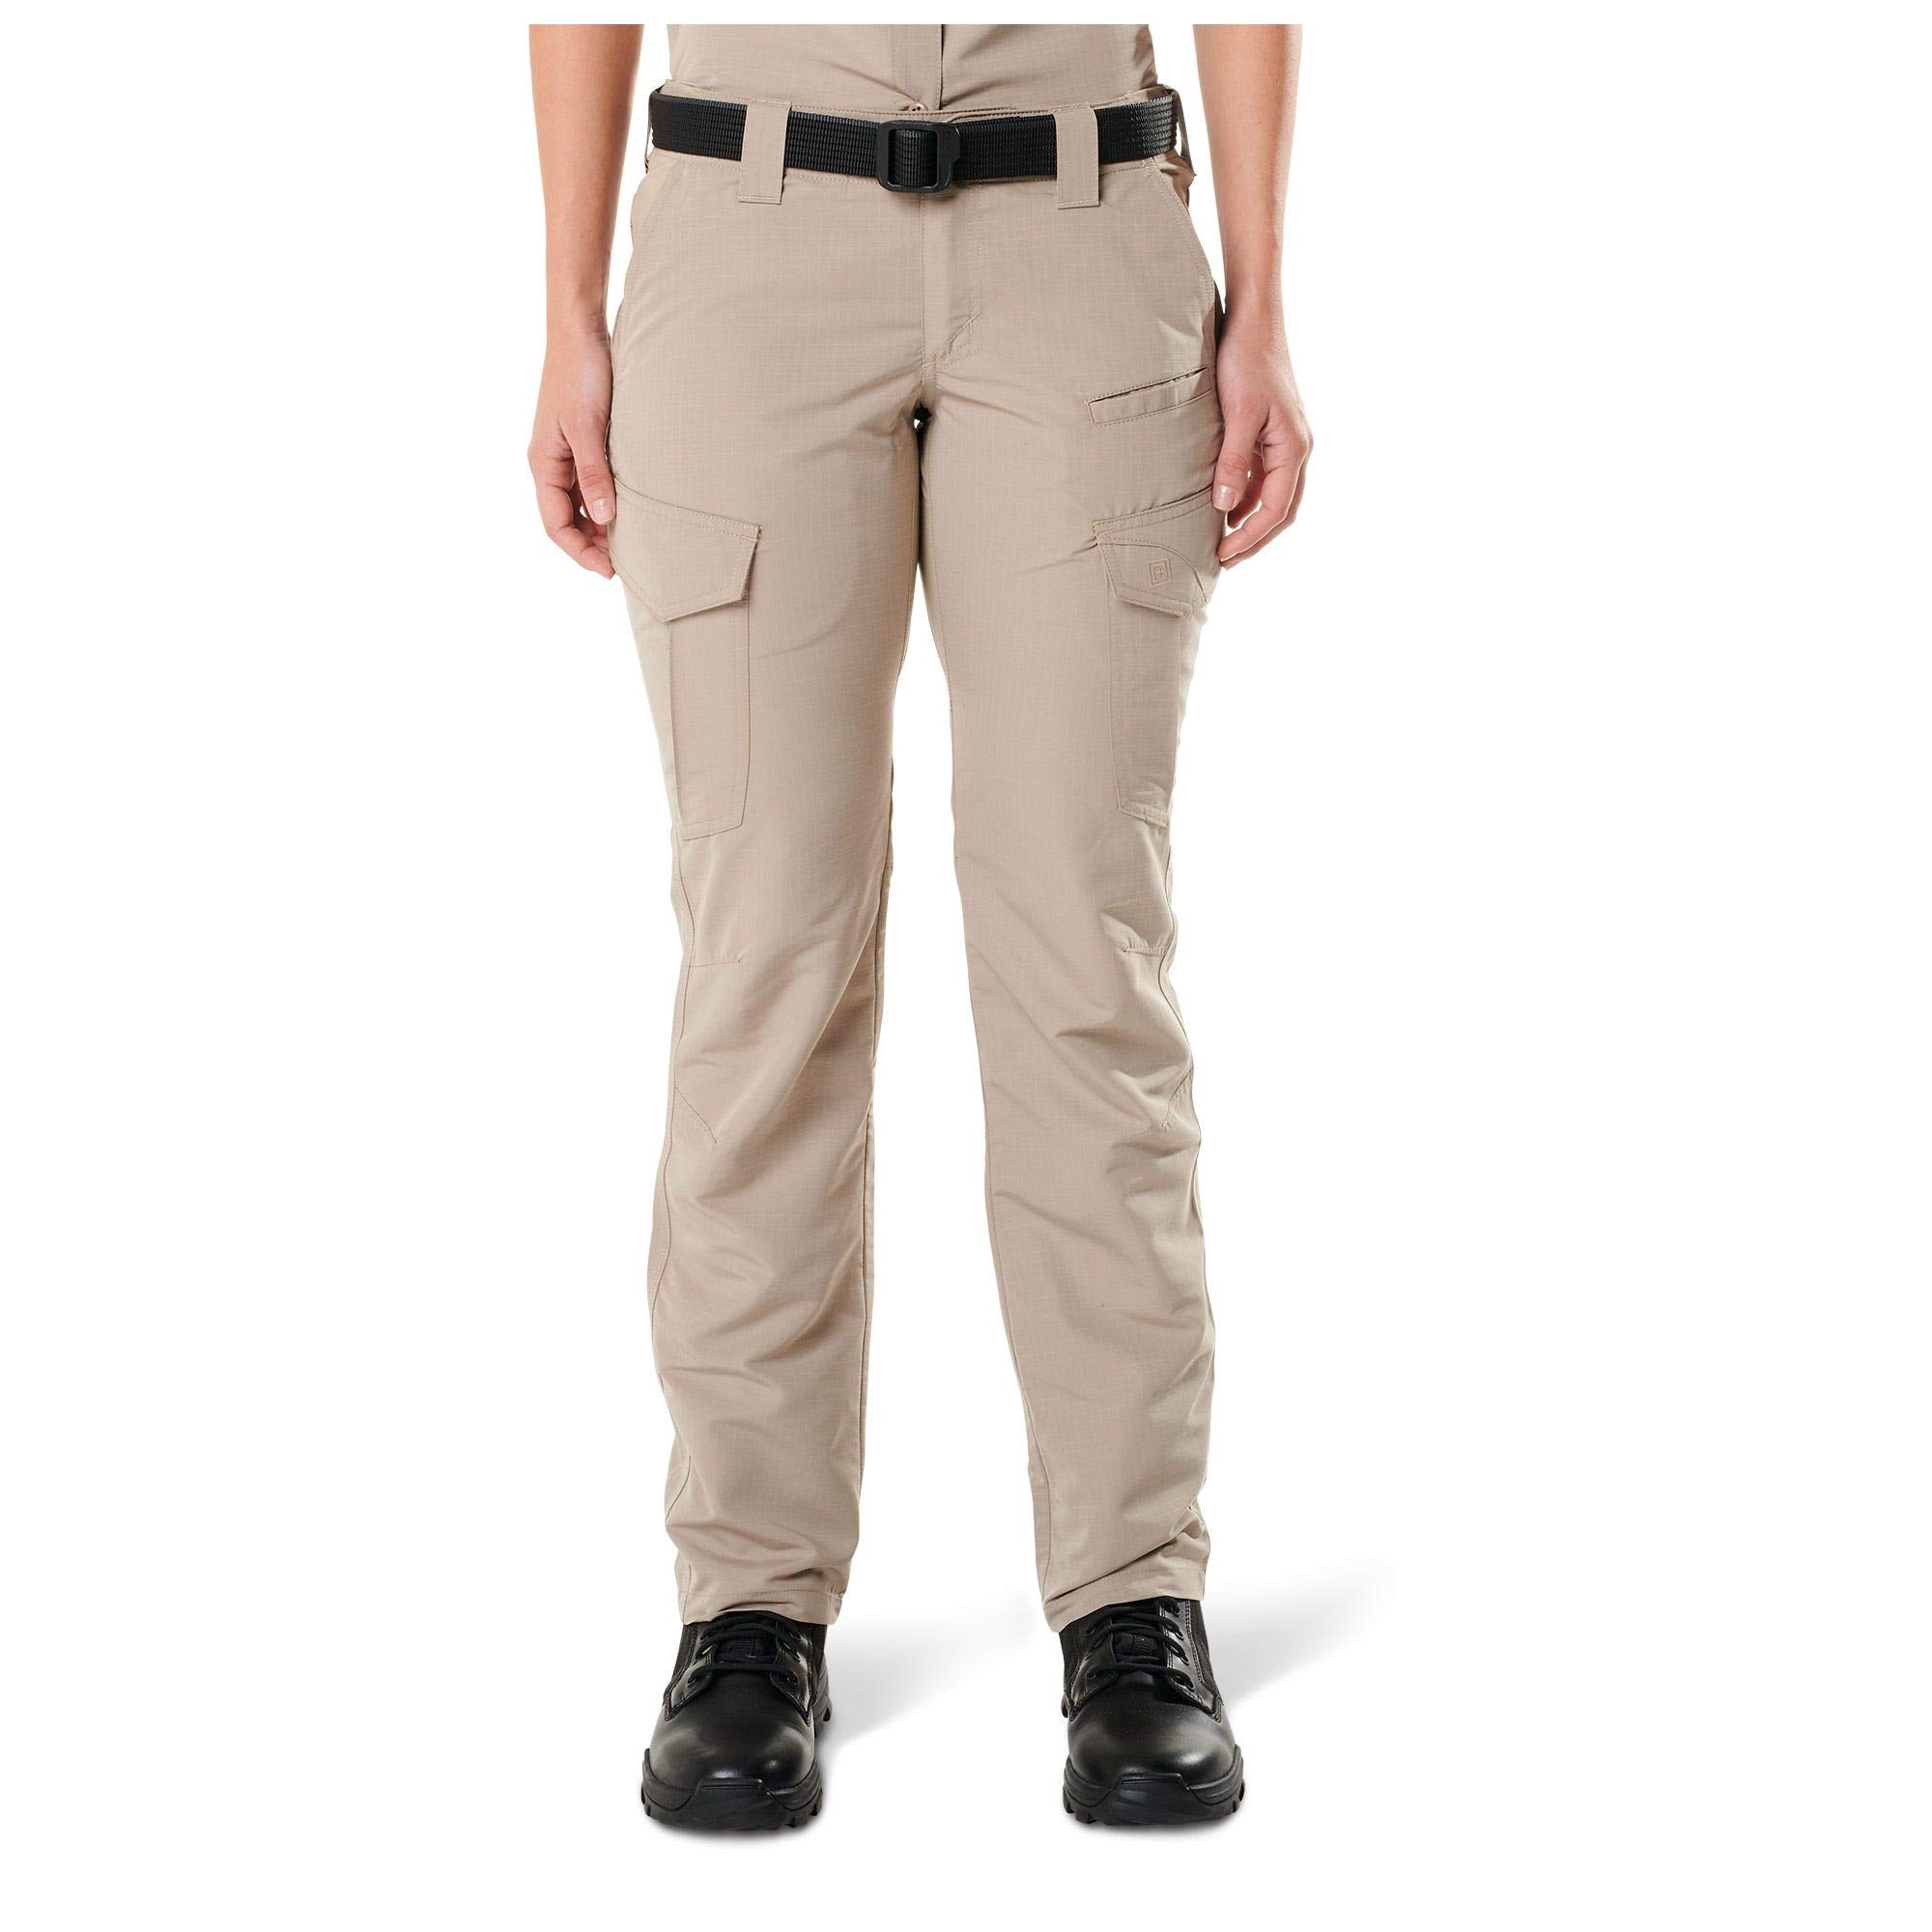 5.11 Women's Fast-TAC Cargo Tactical Pants, Style 64419, Khaki, 12 Long